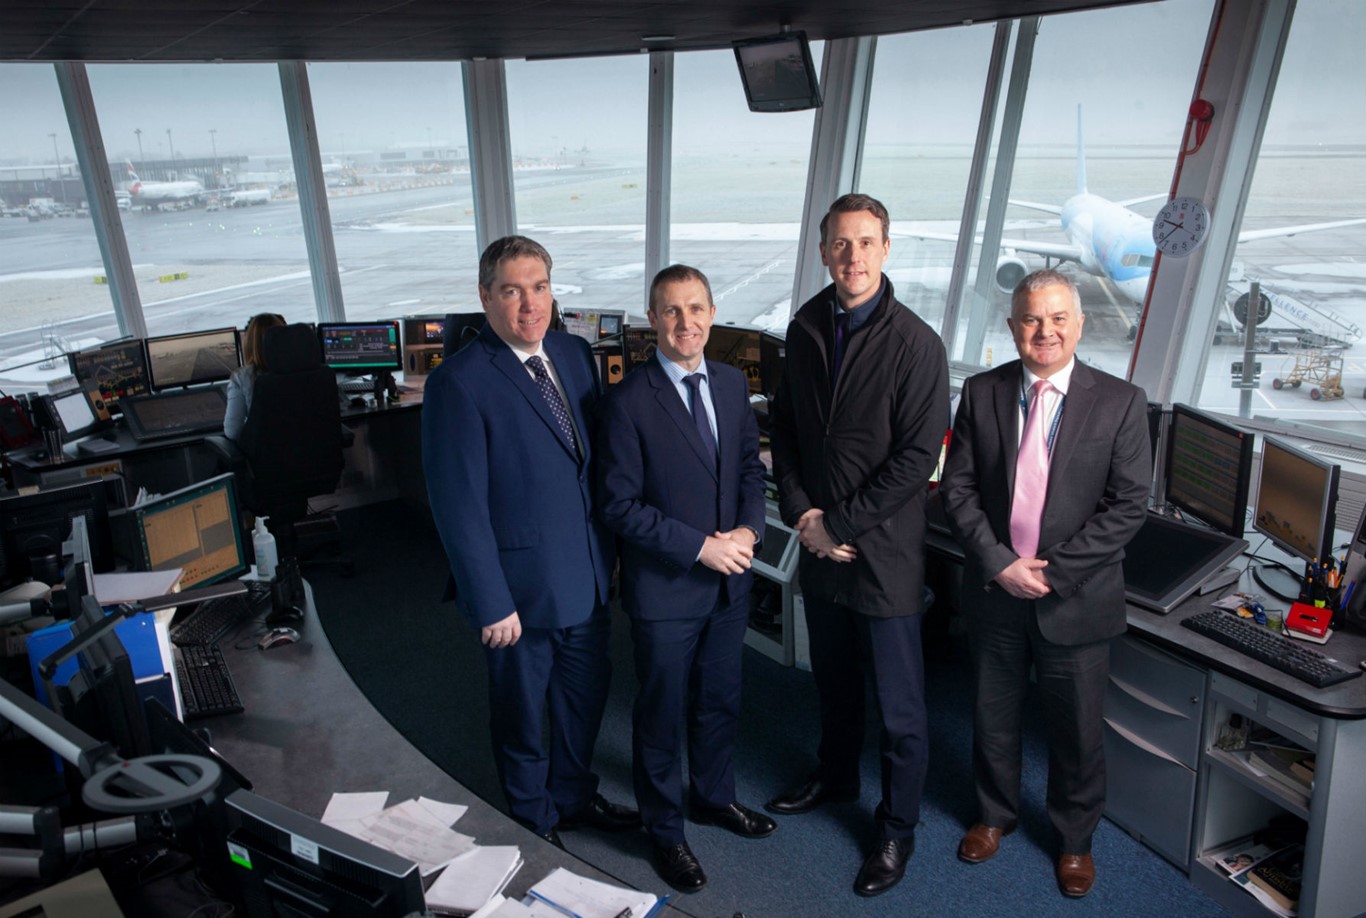 Glasgow Airport RADAR project allows wind farm plans to take flight